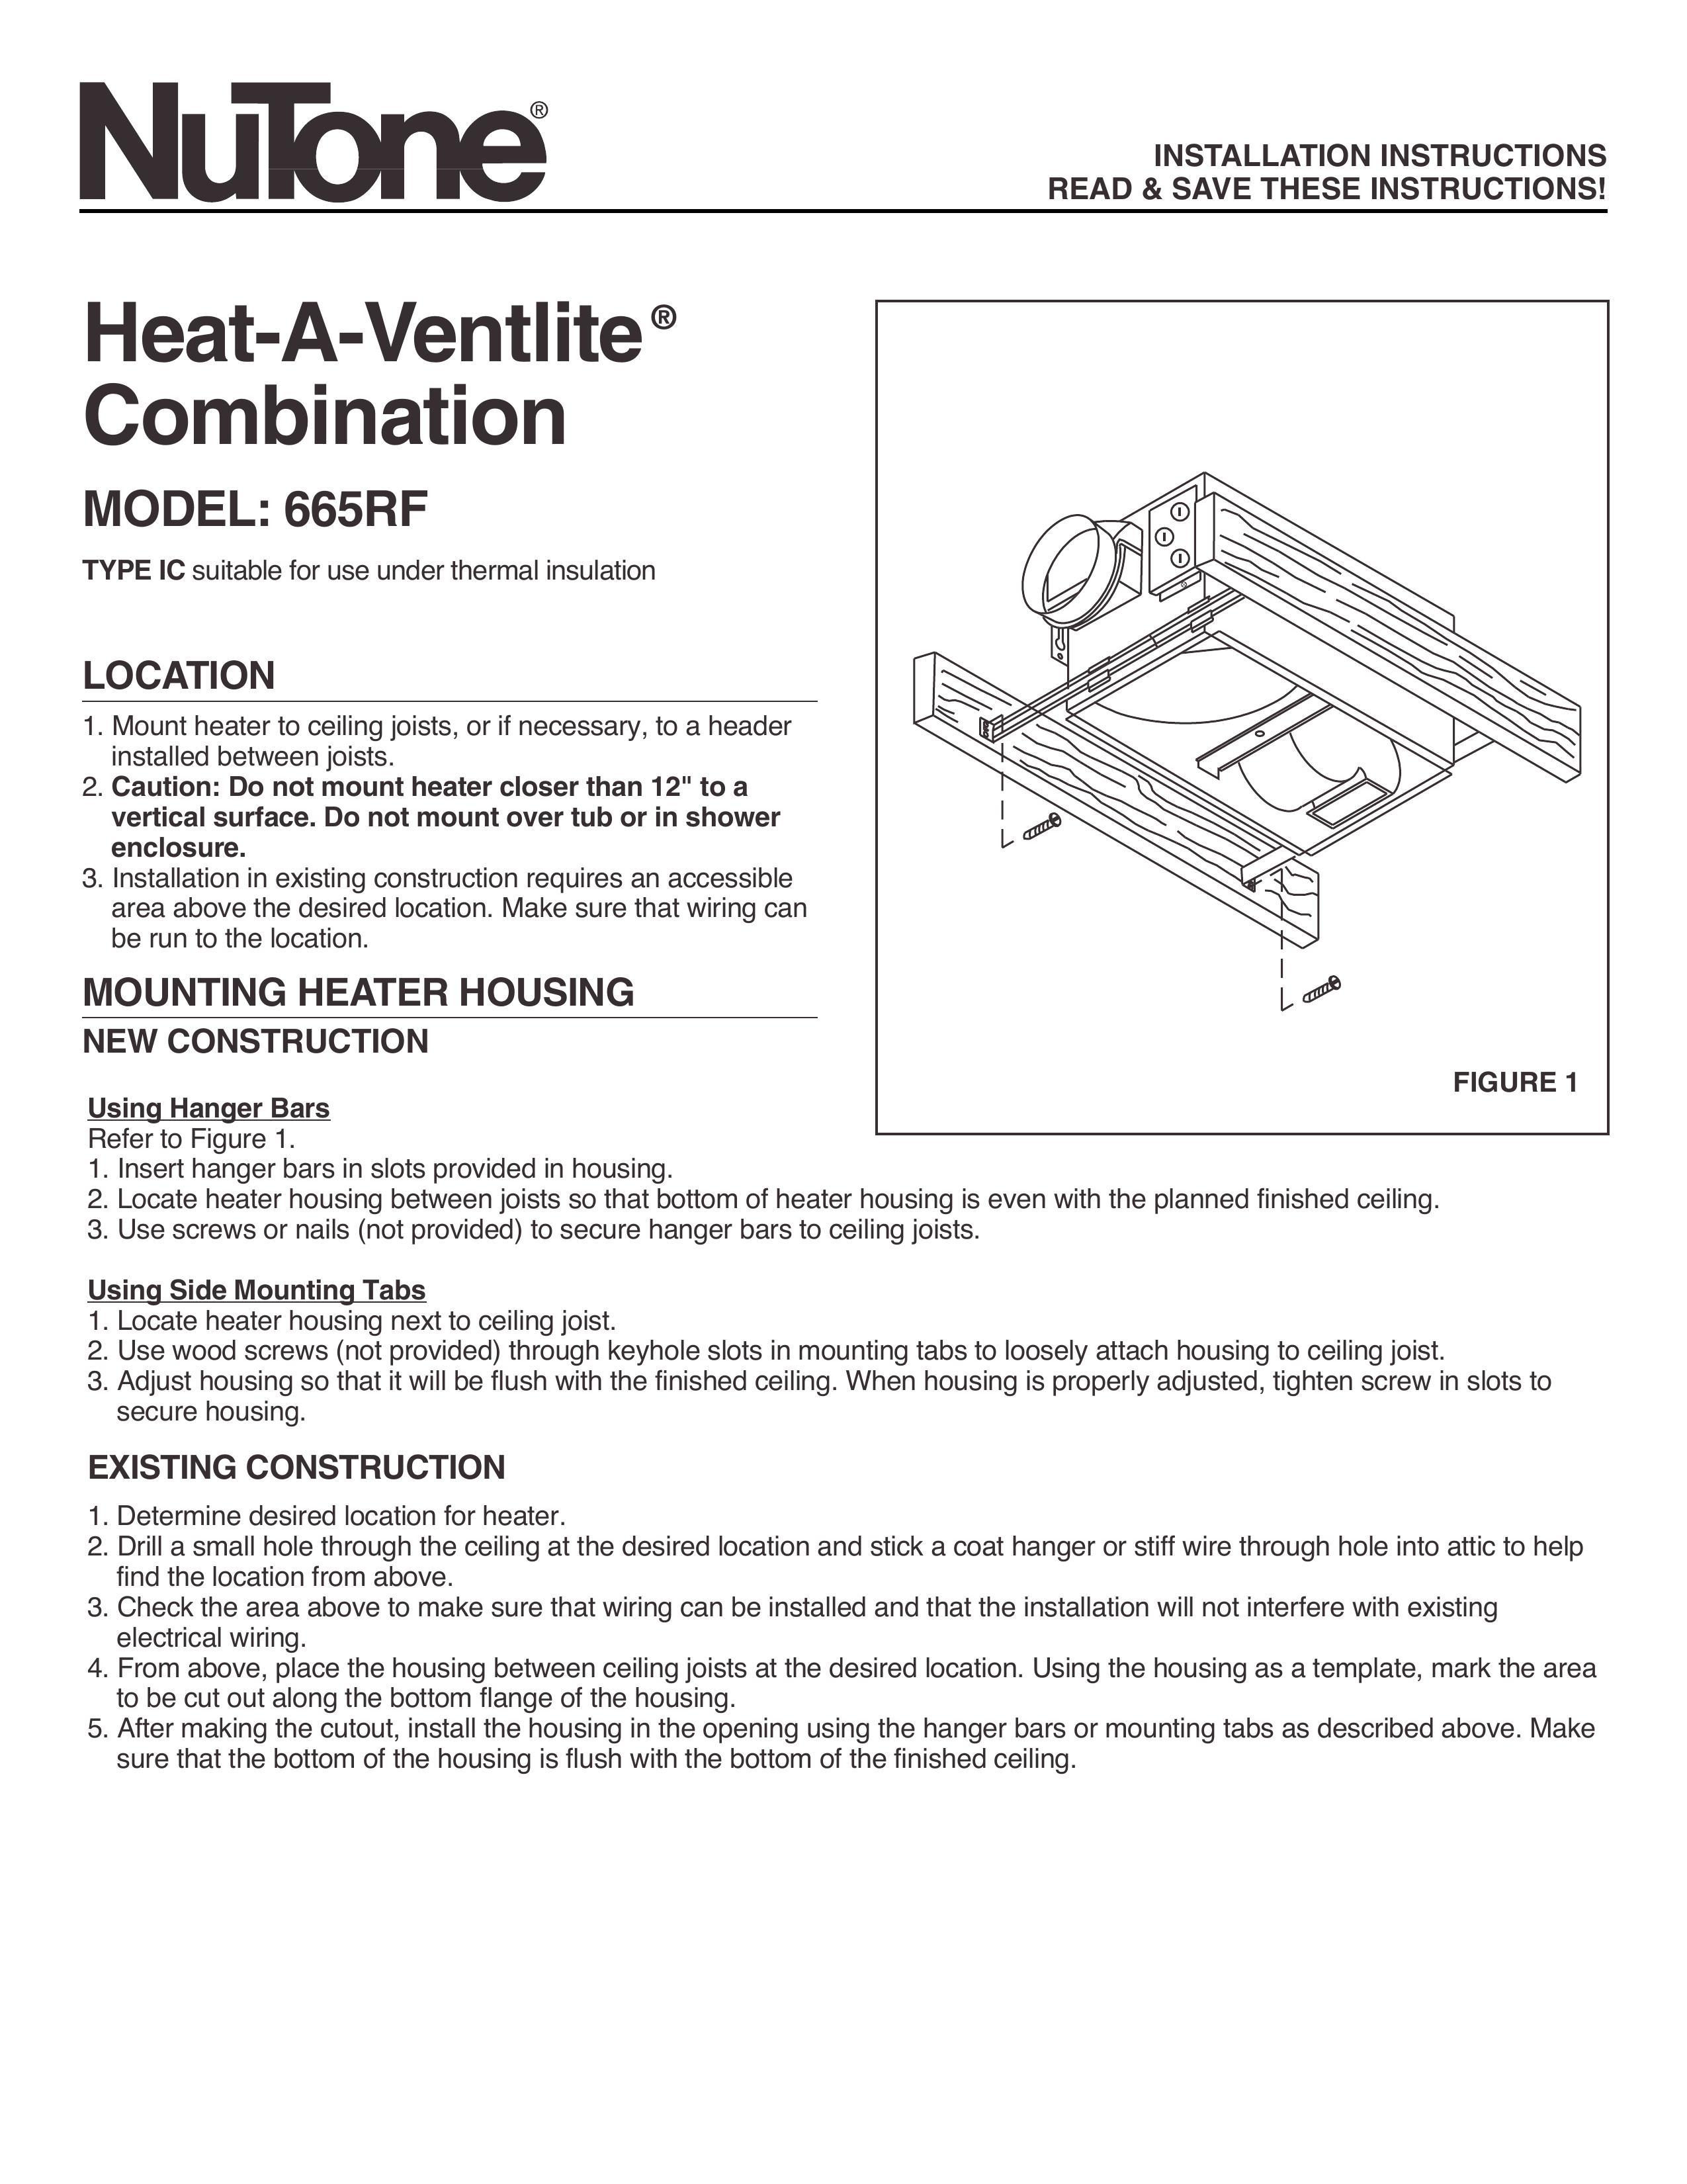 NuTone 665RF Marine Heating System User Manual